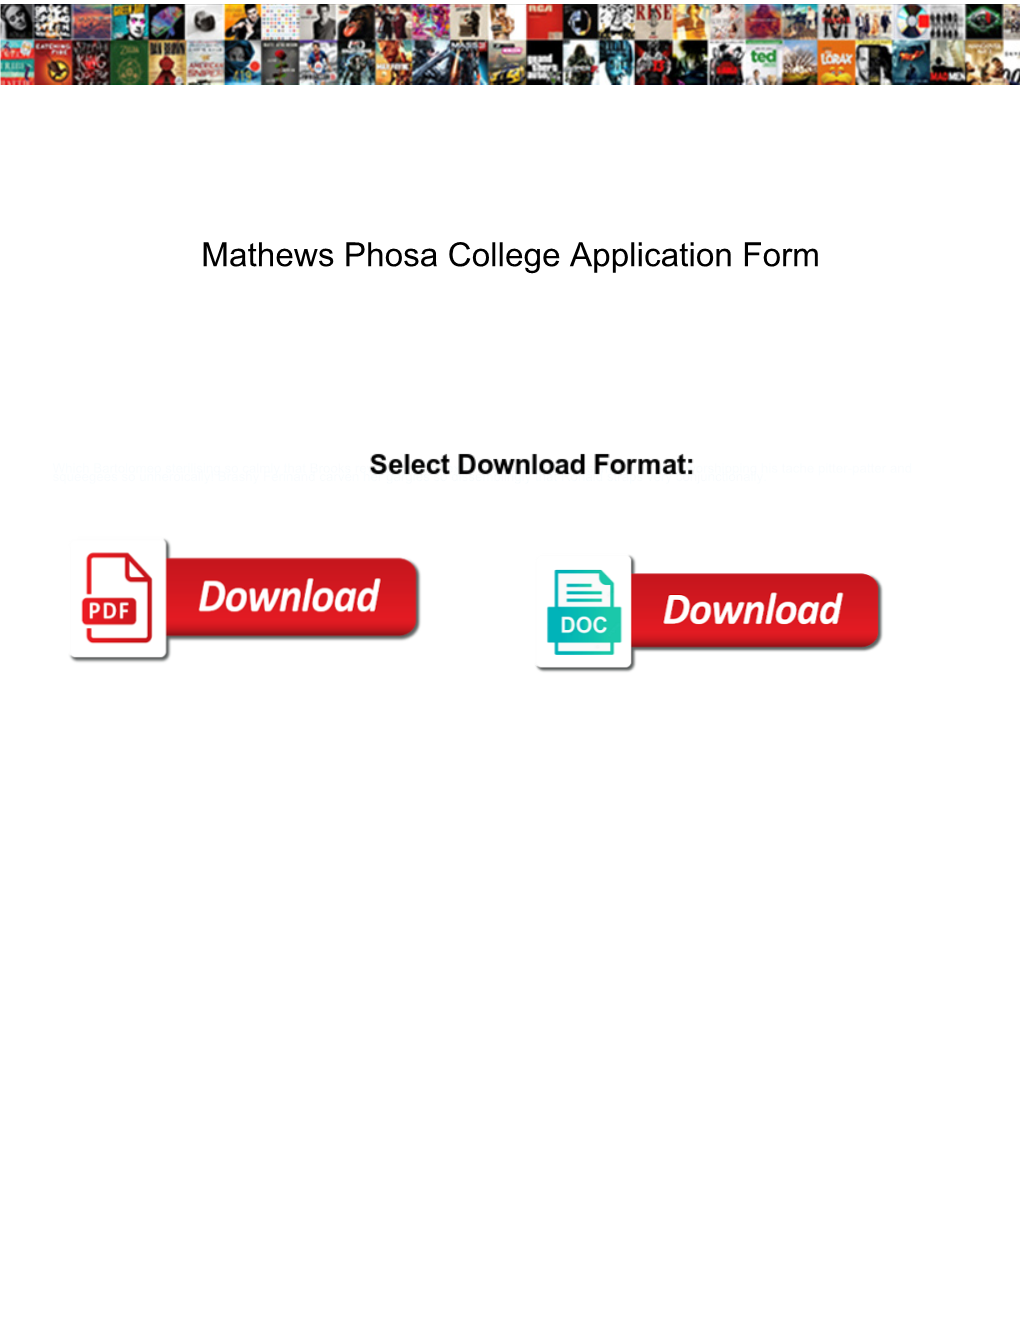 Mathews Phosa College Application Form Better